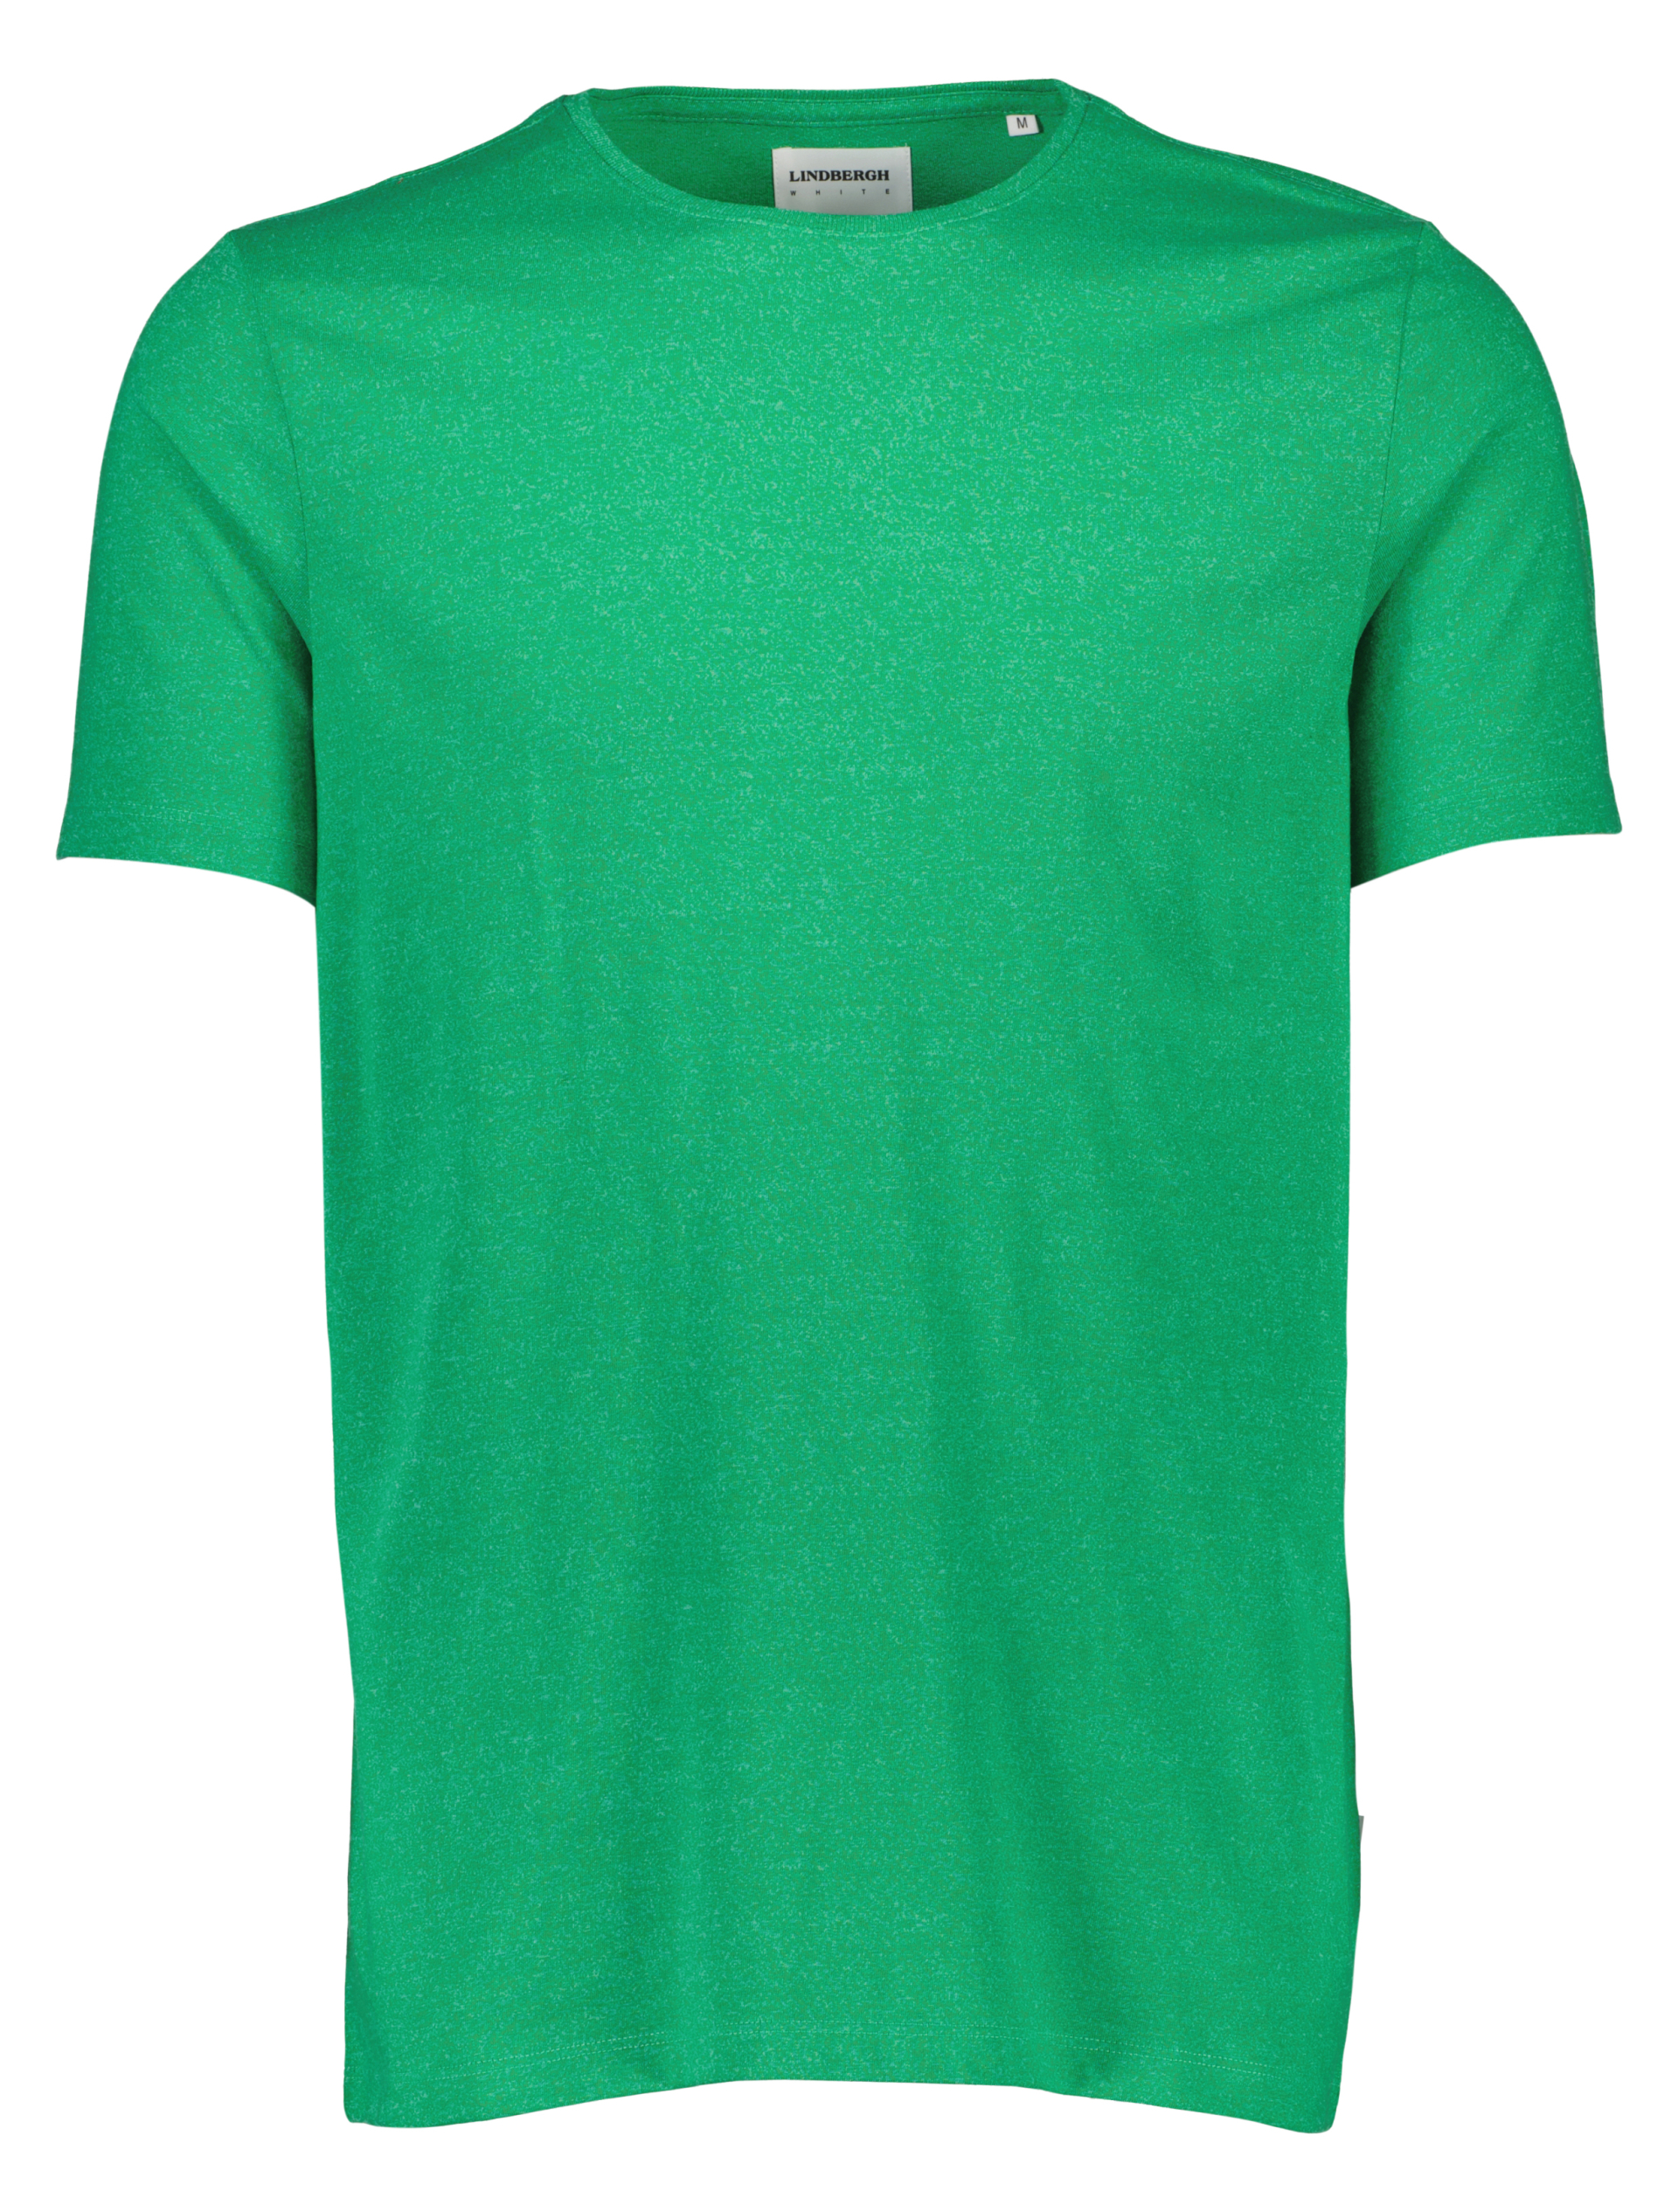 Lindbergh T-Shirt grün / bright green mix 323